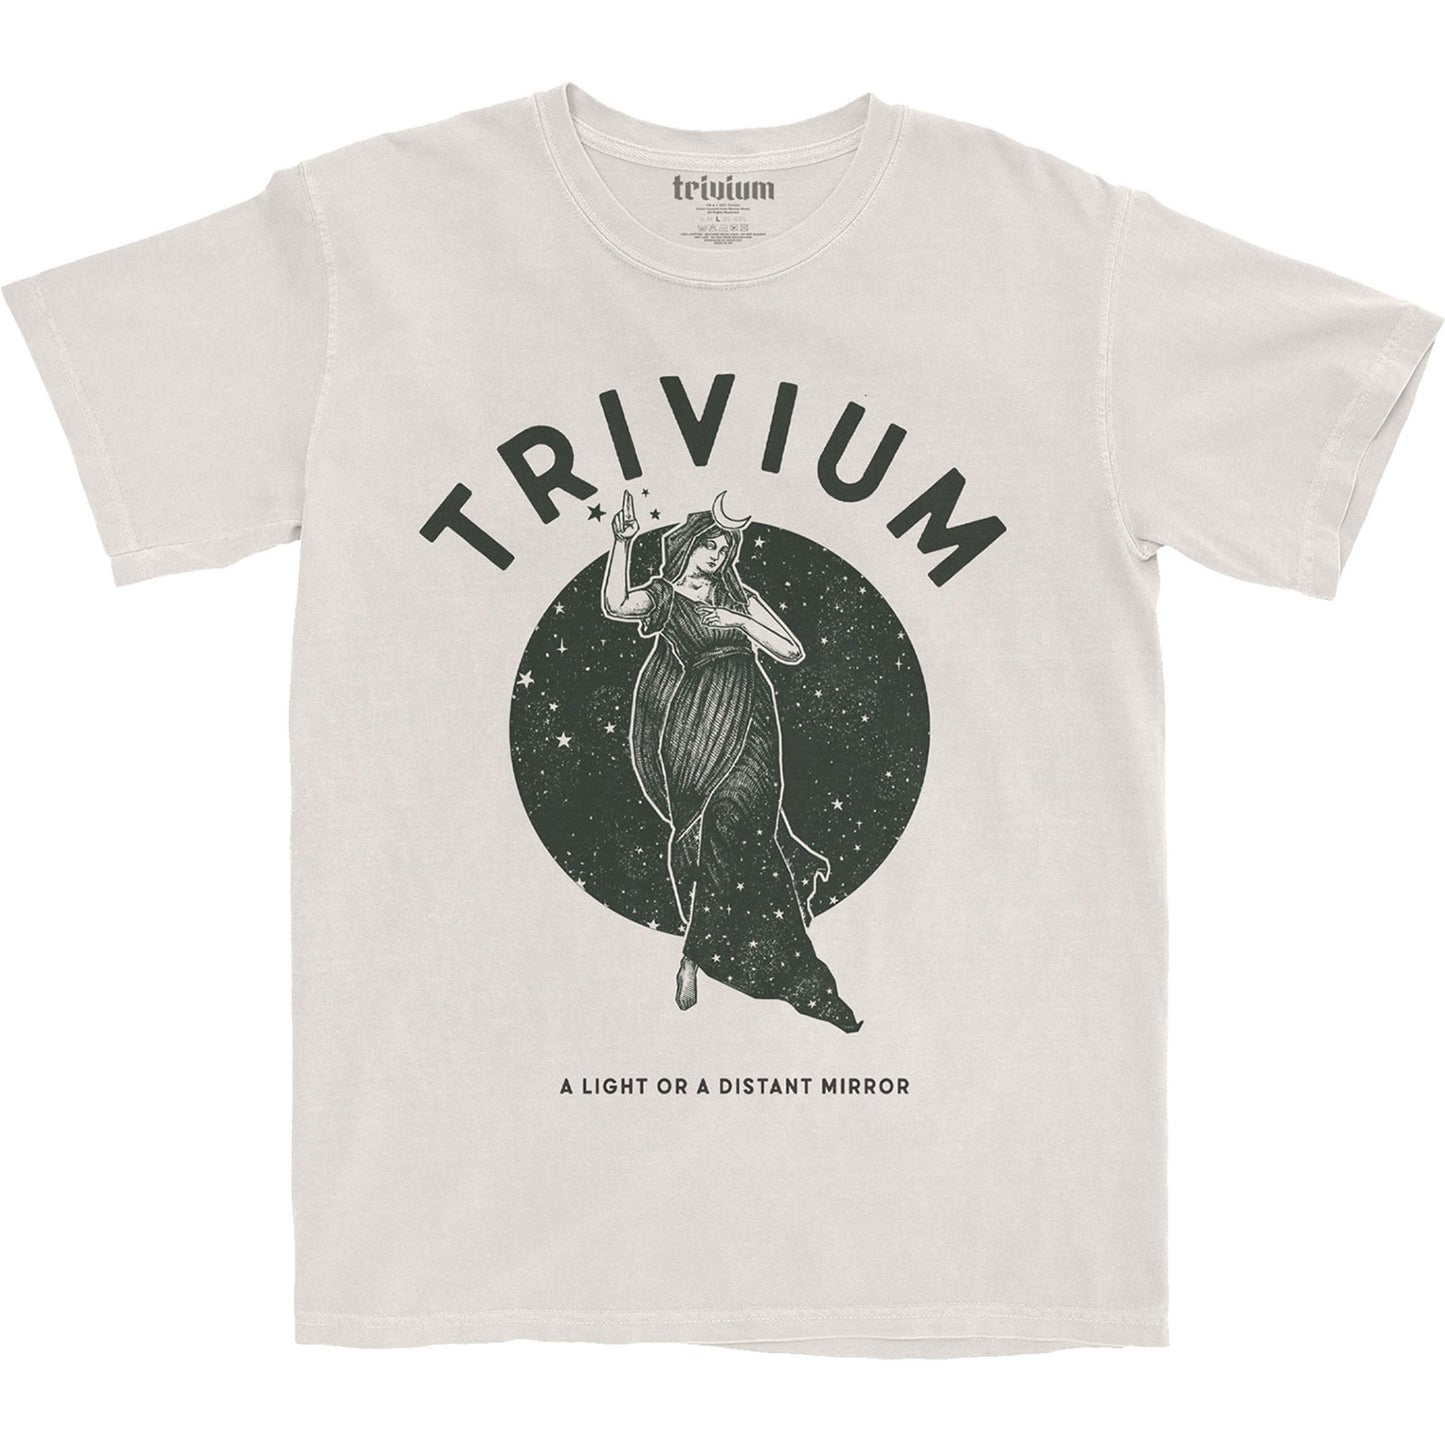 Trivium T-Shirt: Moon Goddess